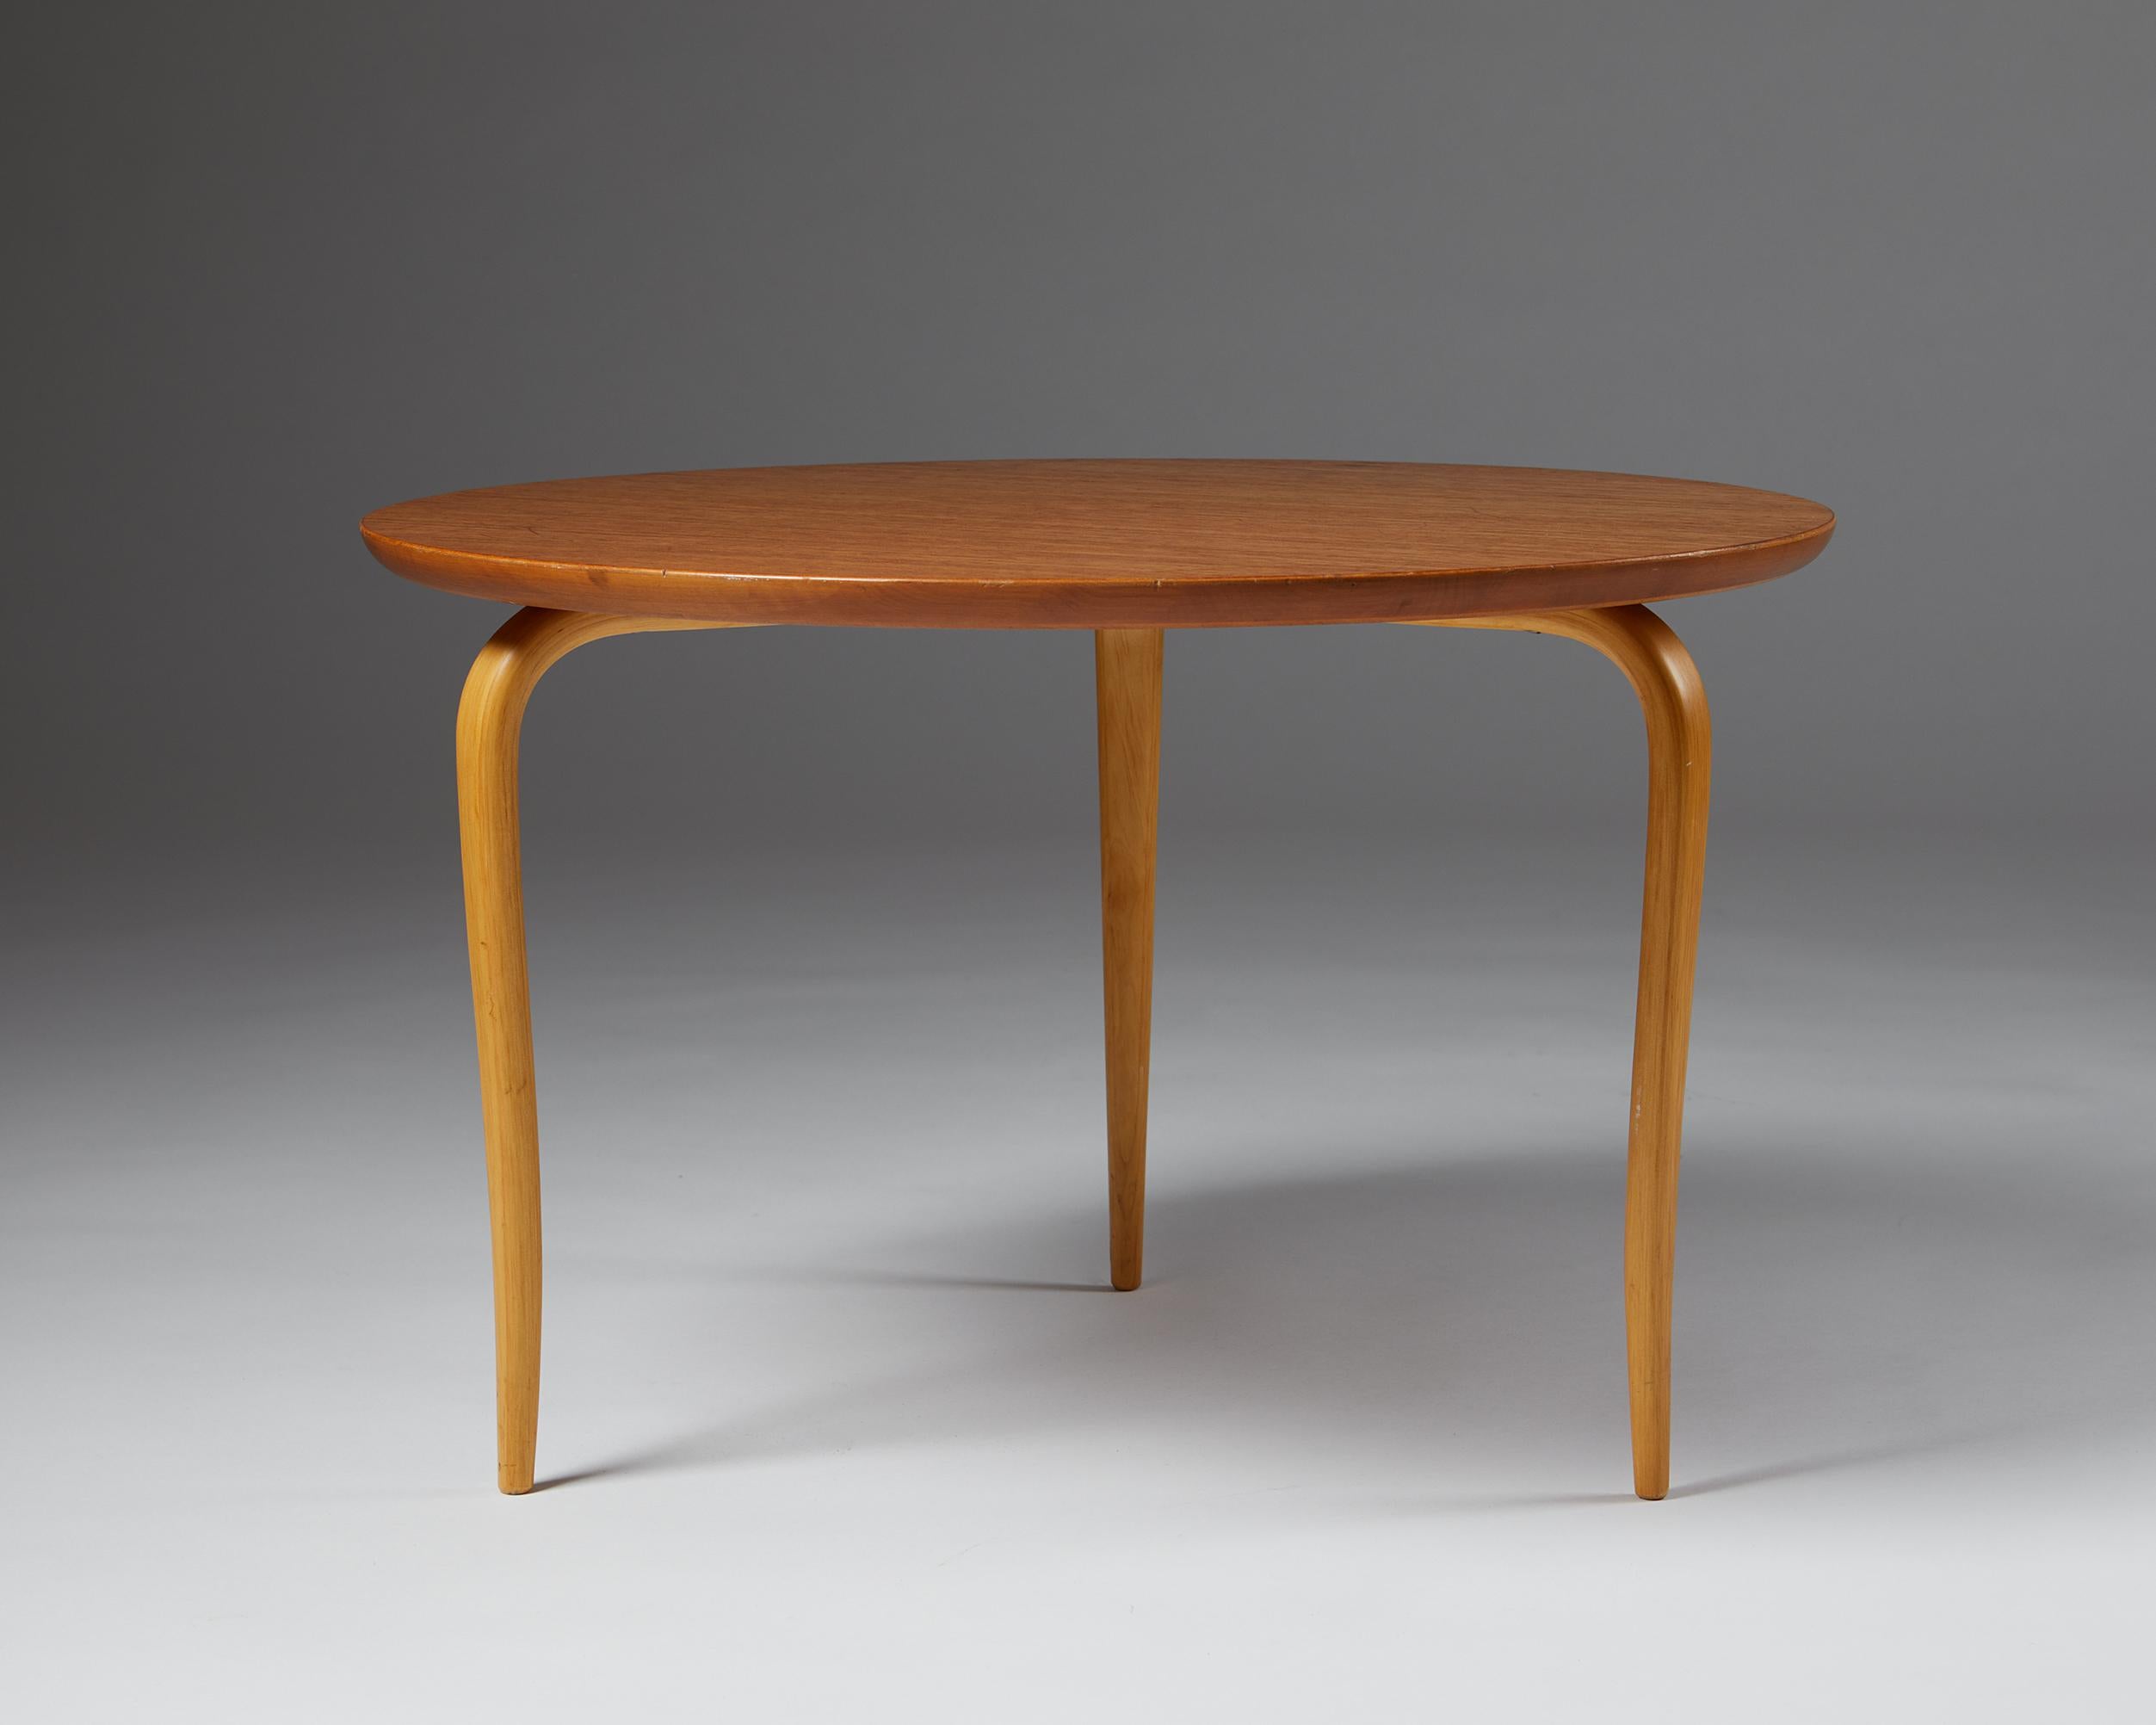 Swedish Occasional Table “Annika” Designed by Bruno Mathsson for Karl Mathsson, Sweden 